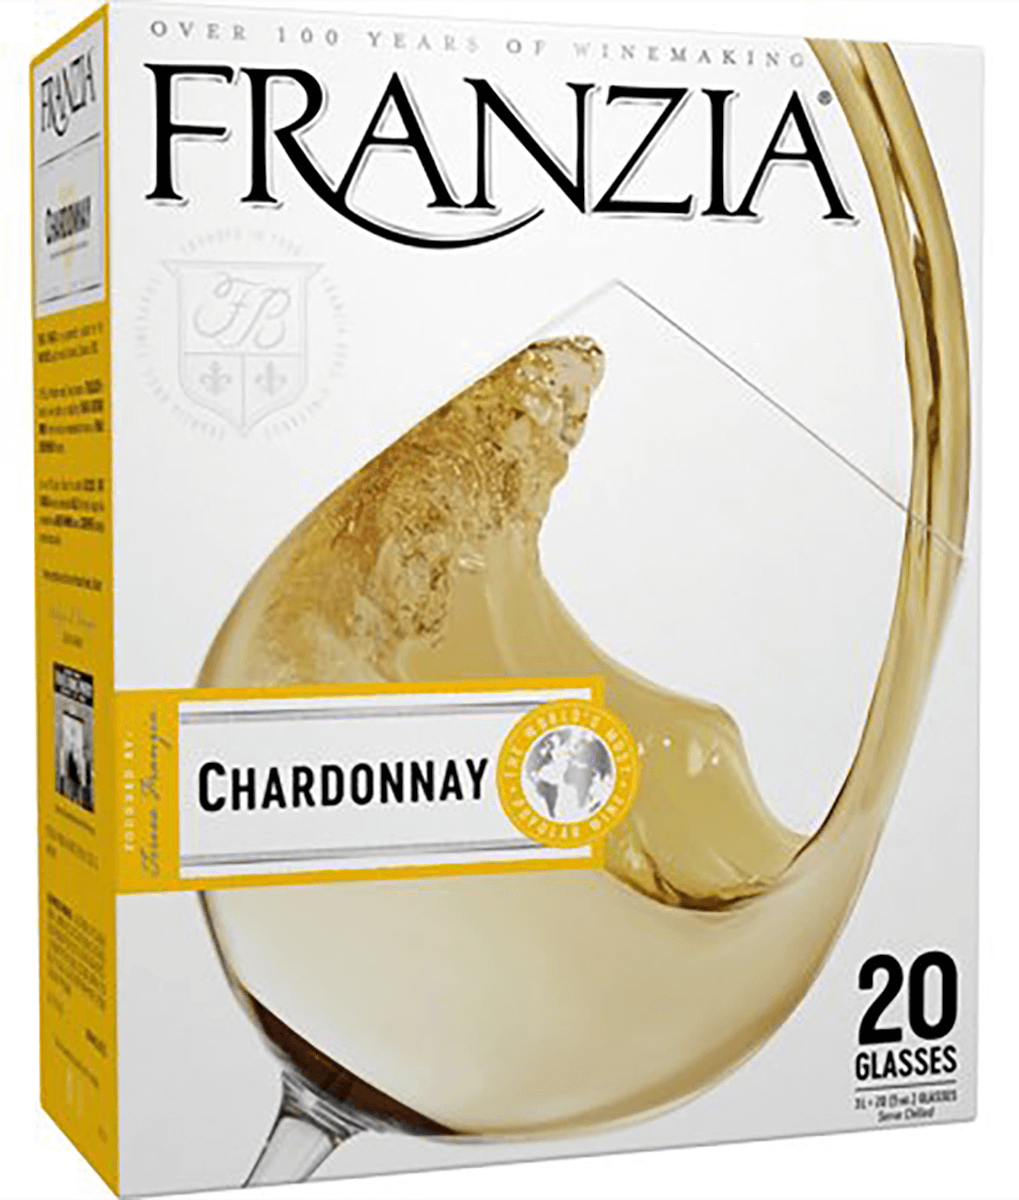 images/wine/WHITE WINE/Franzia Chardonnay 5L Box.png